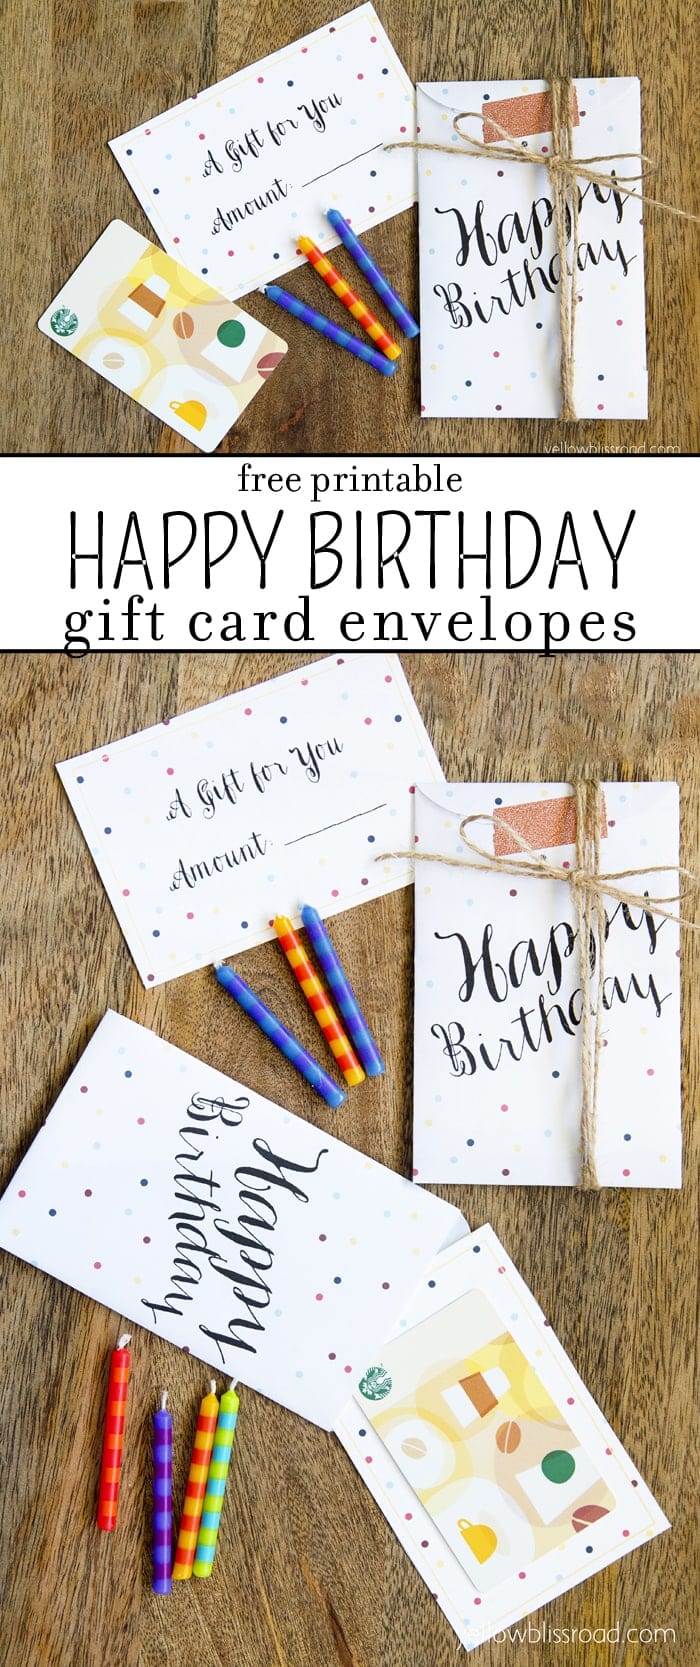 Free Printable Gift Card Envelopes for Birthdays 